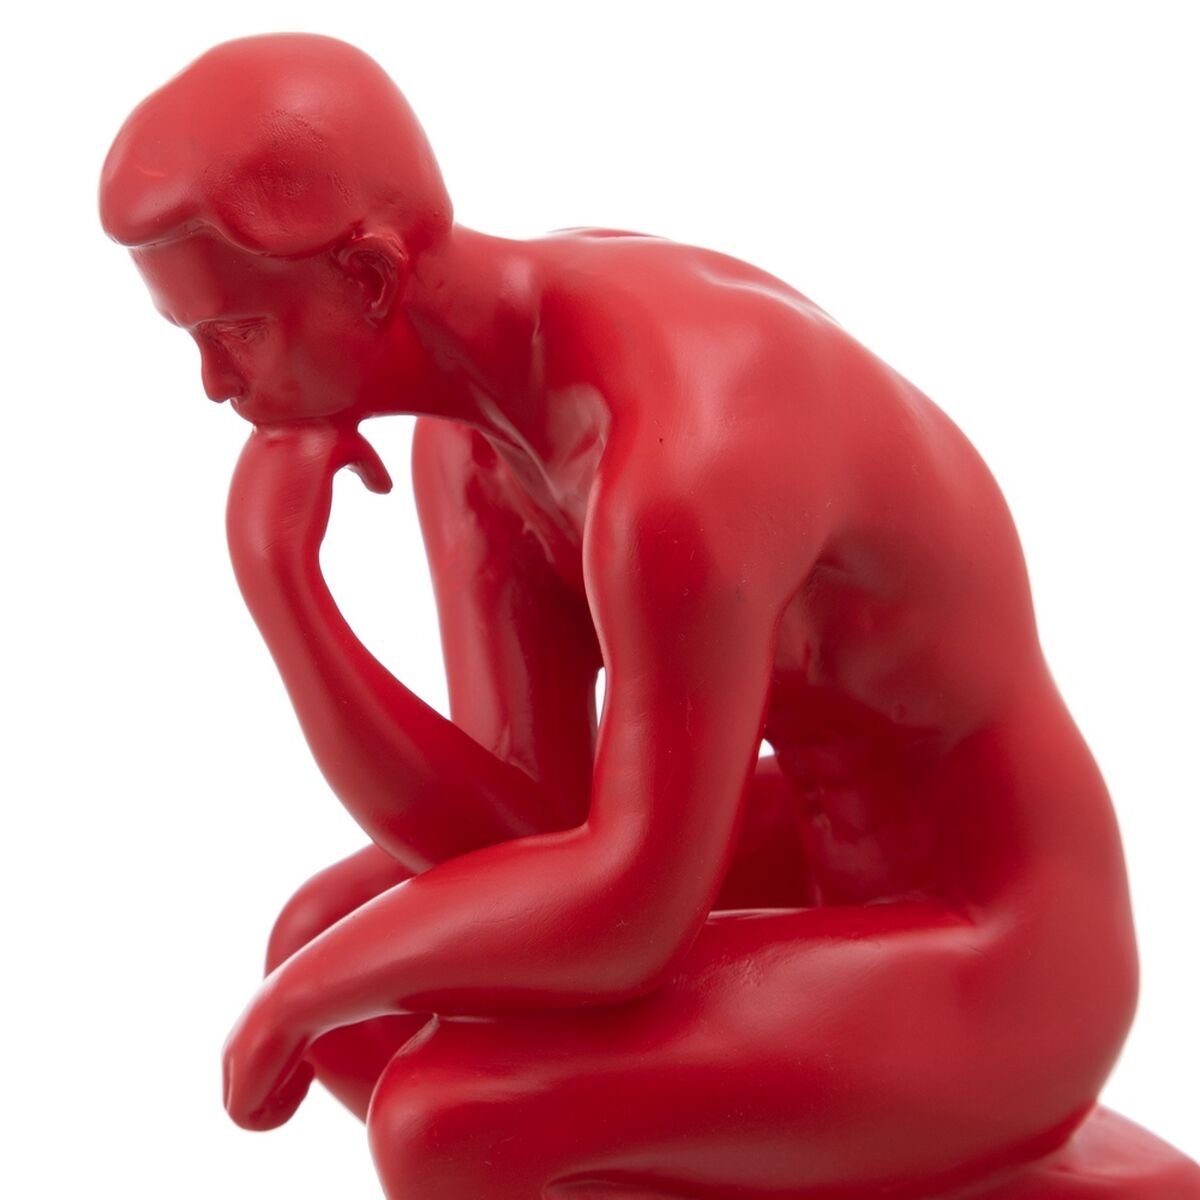 Punainen Thinker 14 x 11 x 22,5 cm